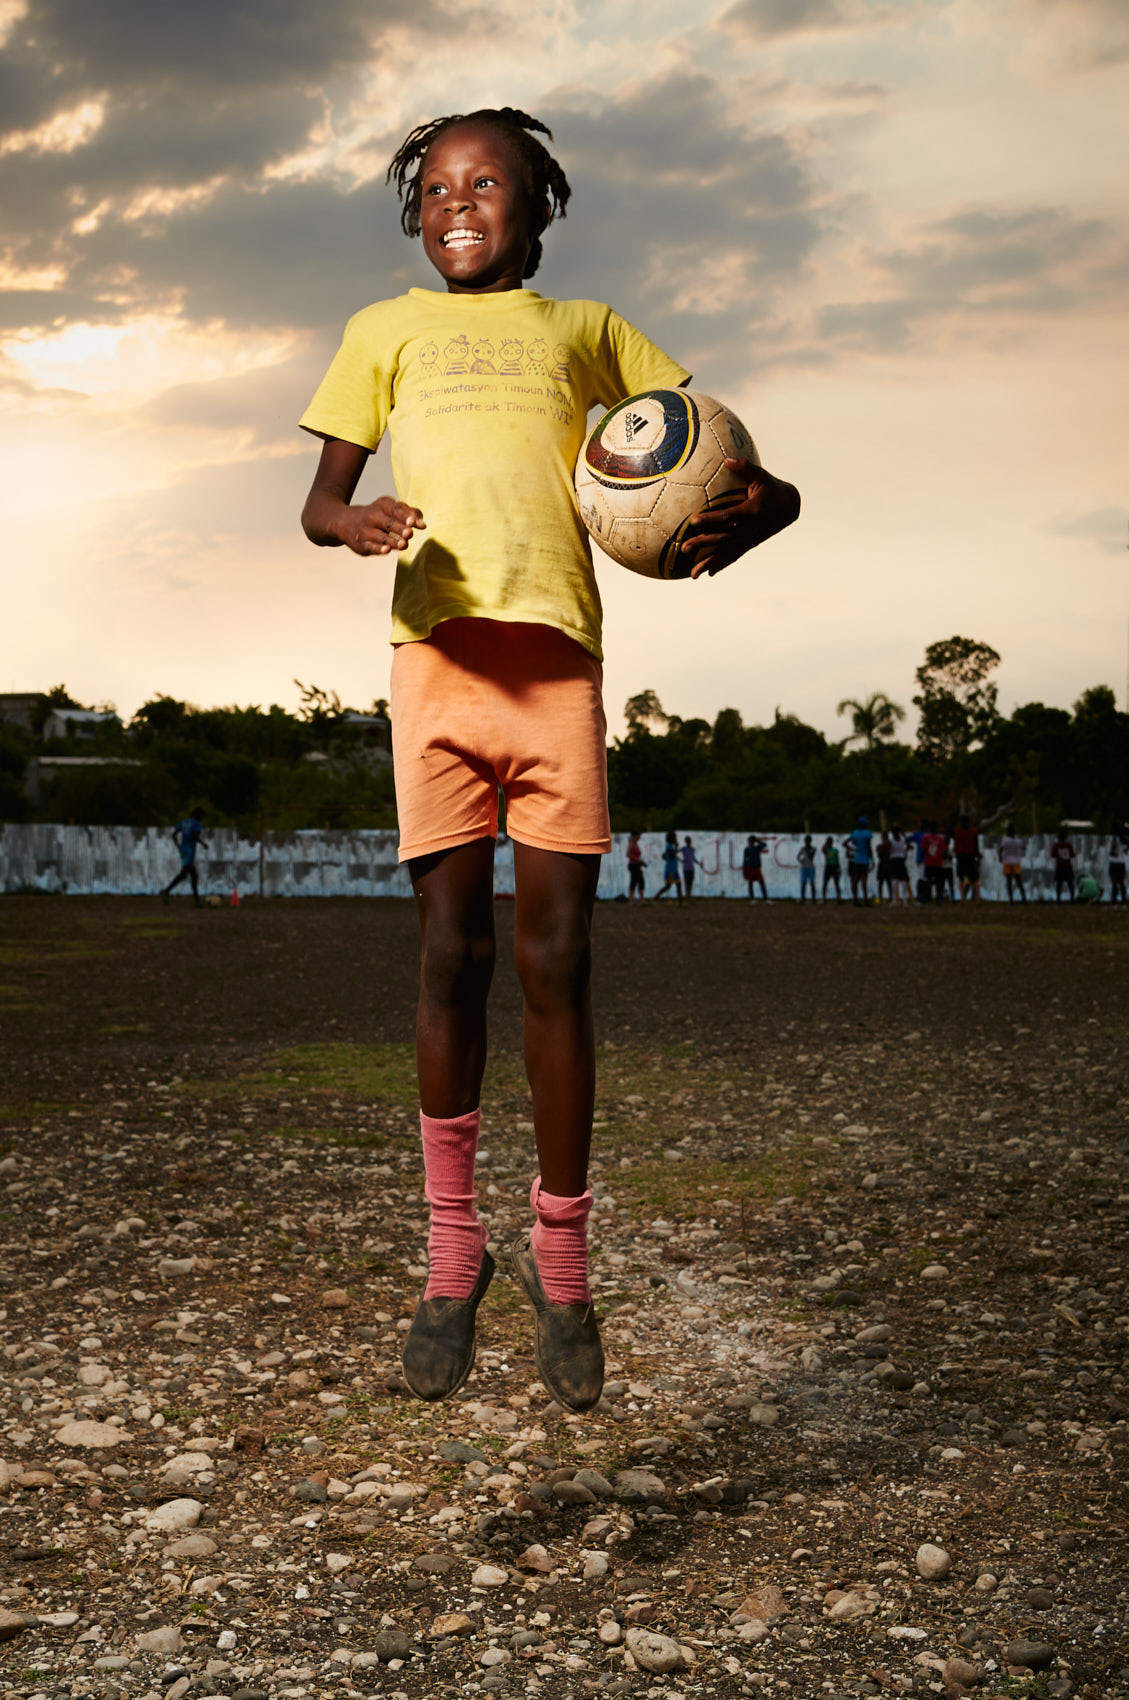 Goals Beyond the Net | Pignon, Haiti | Cameron Davidson